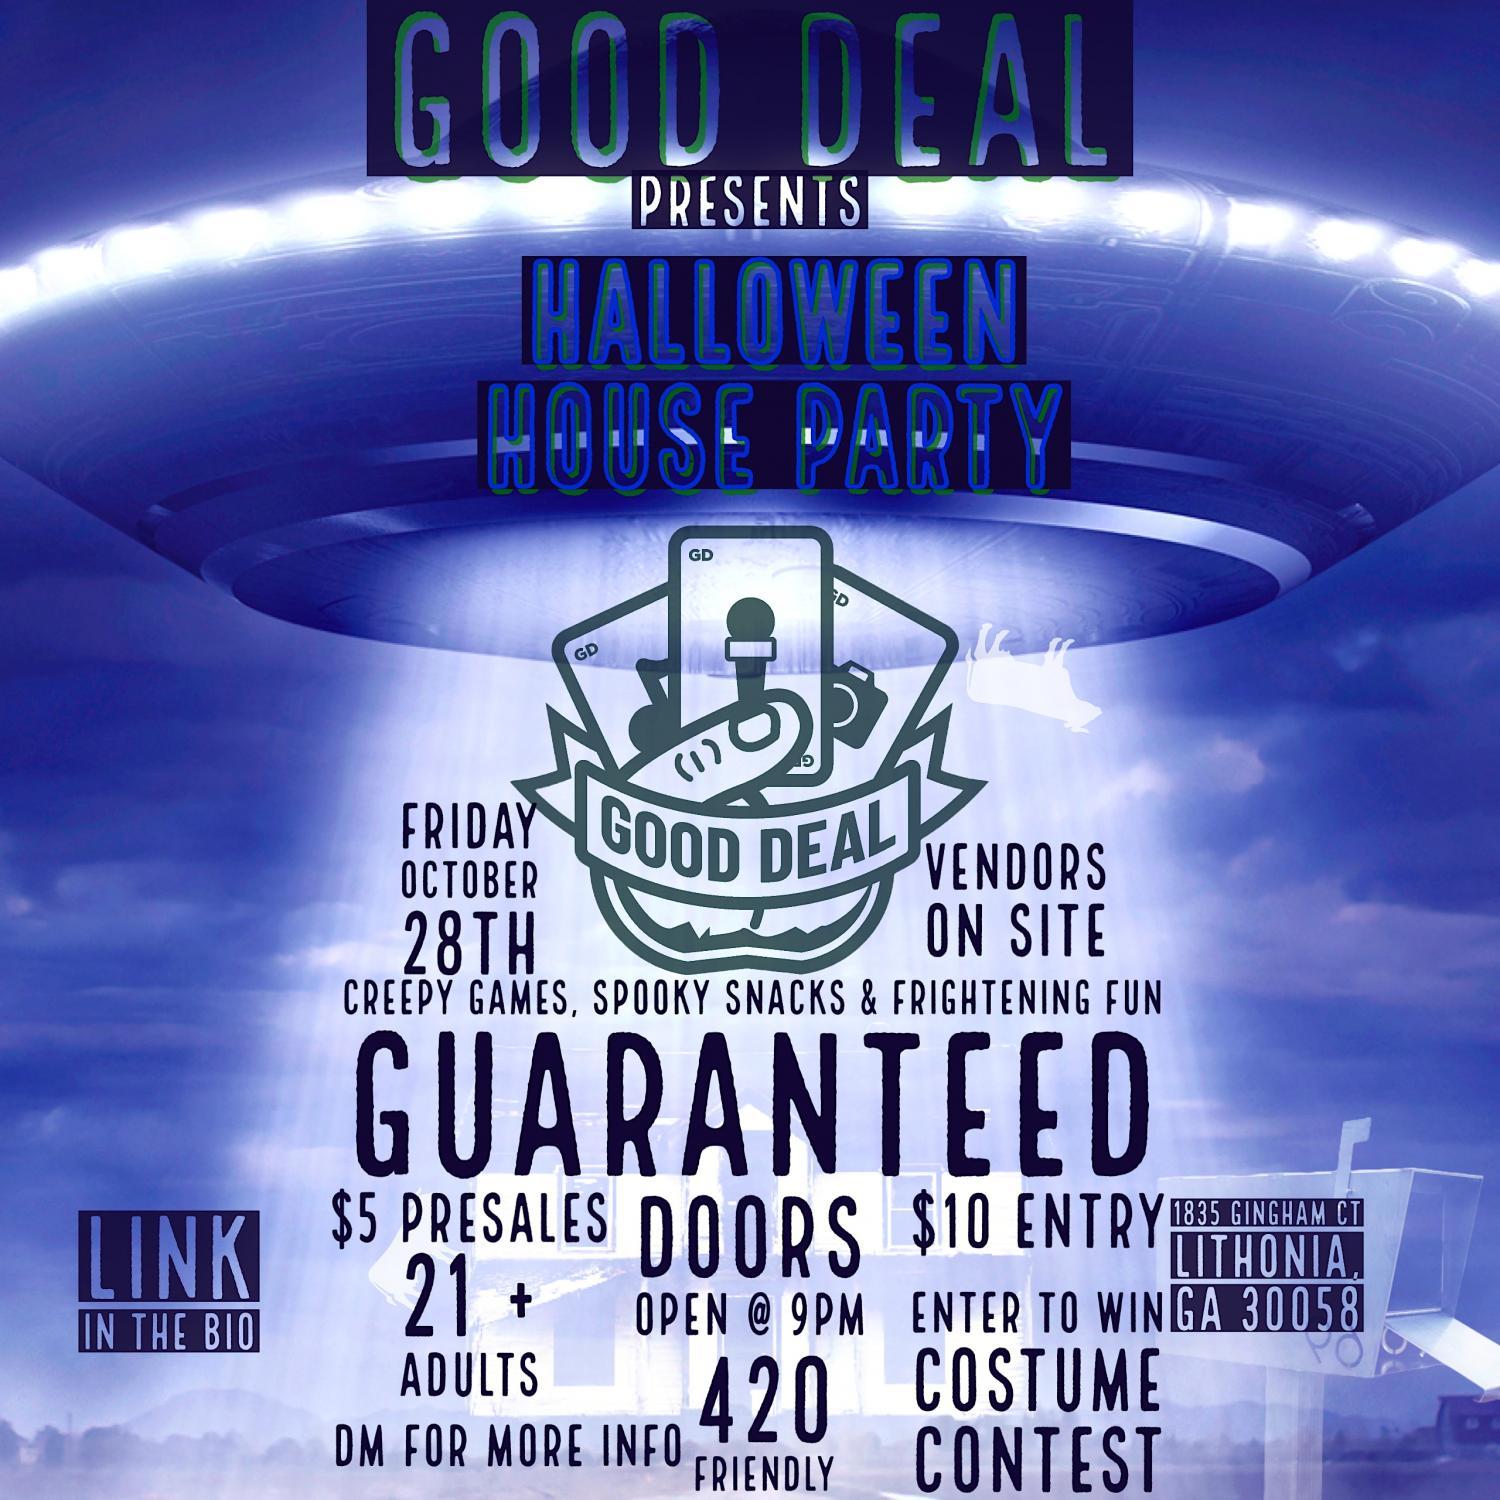 Good Deal Halloween Party
Fri Oct 28, 9:00 PM - Sat Oct 29, 12:00 AM
in 8 days